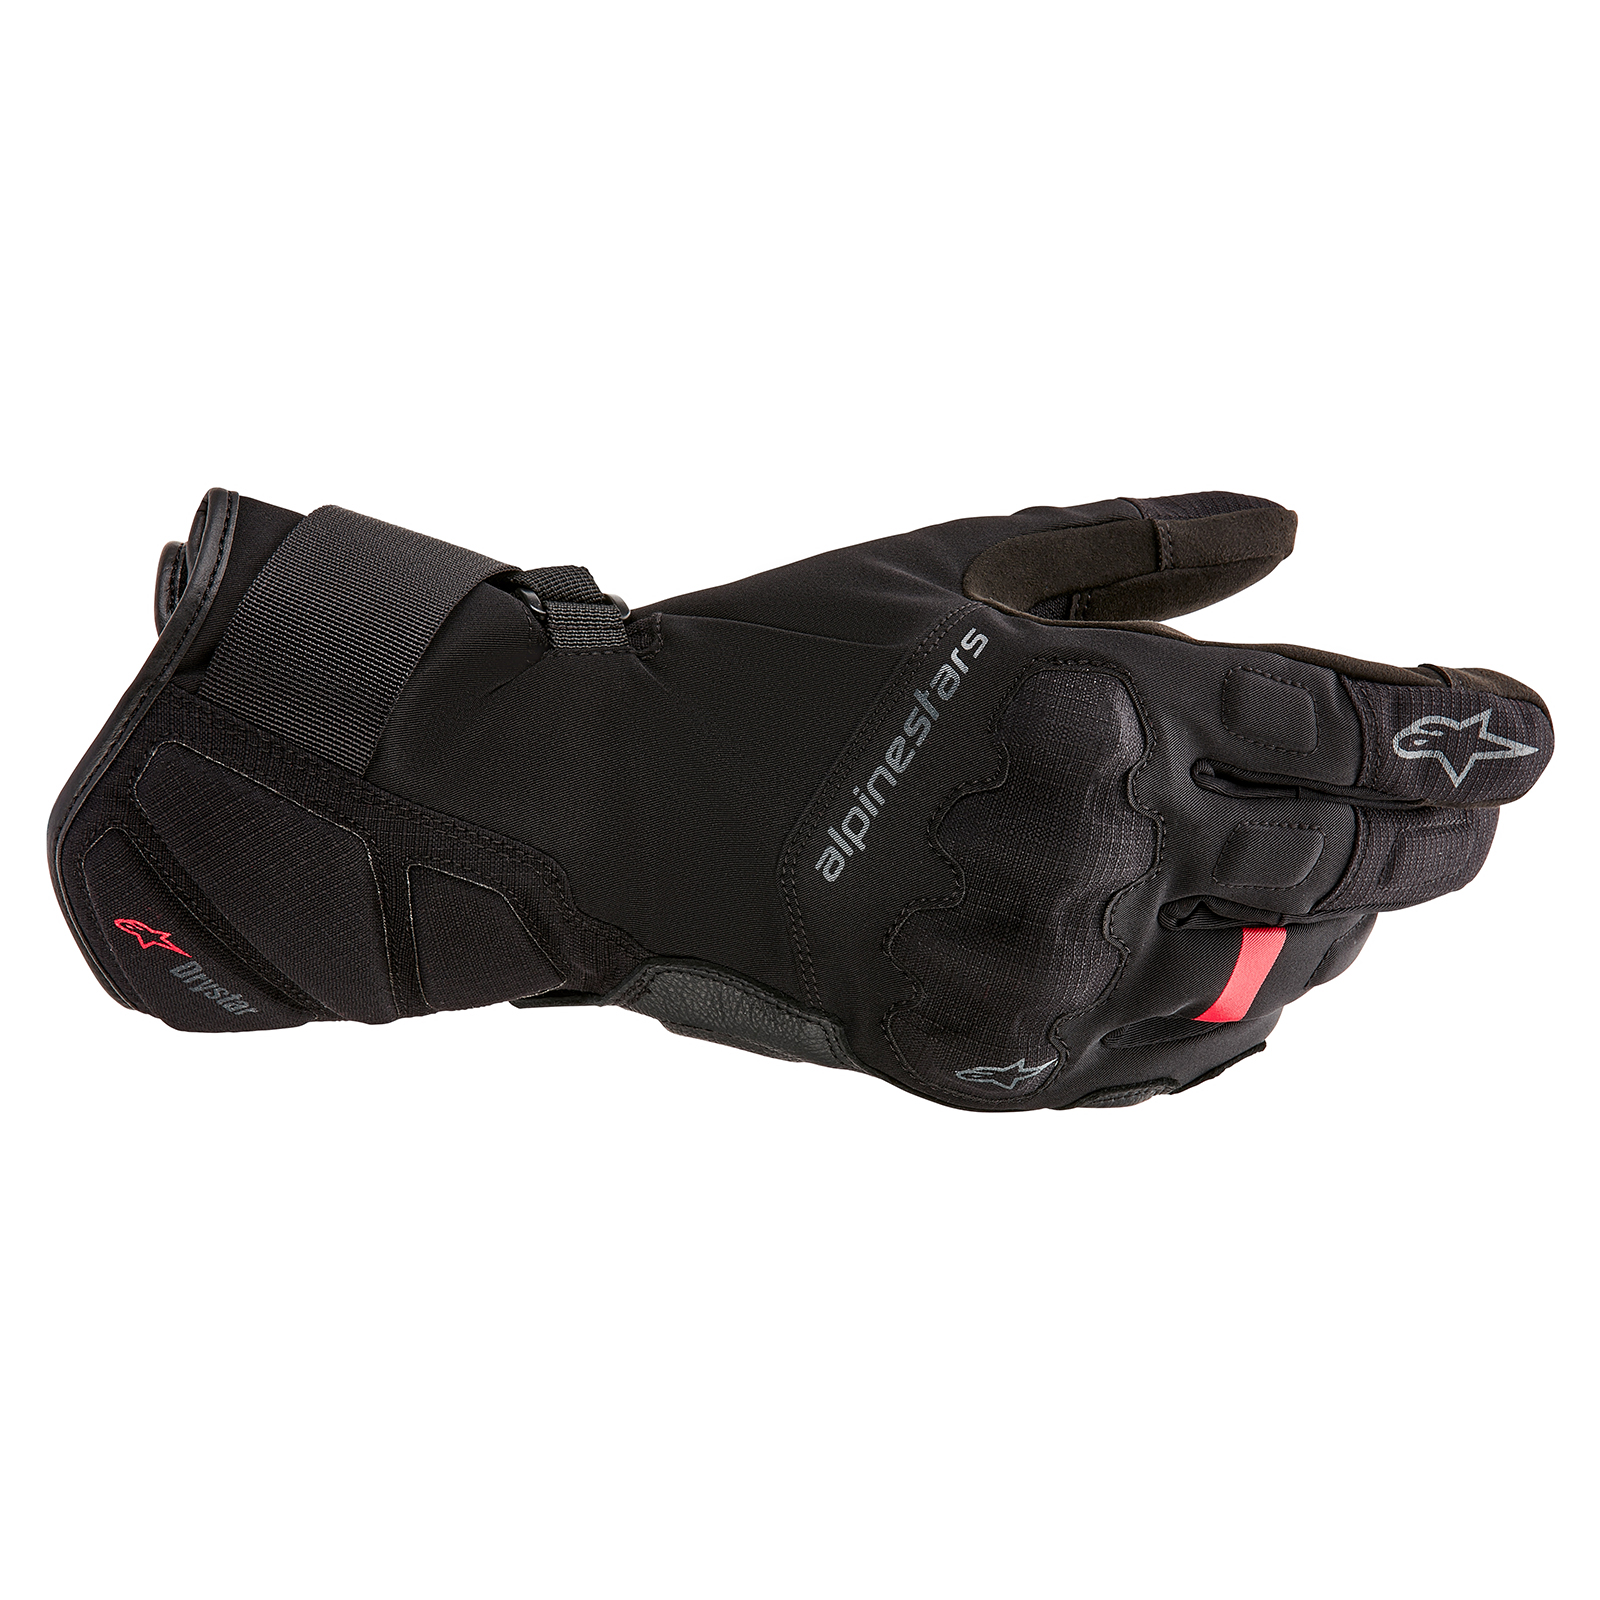 Viewing Images For Alpinestars Tourer W7 V2 Gloves :: MotorcycleGear.com